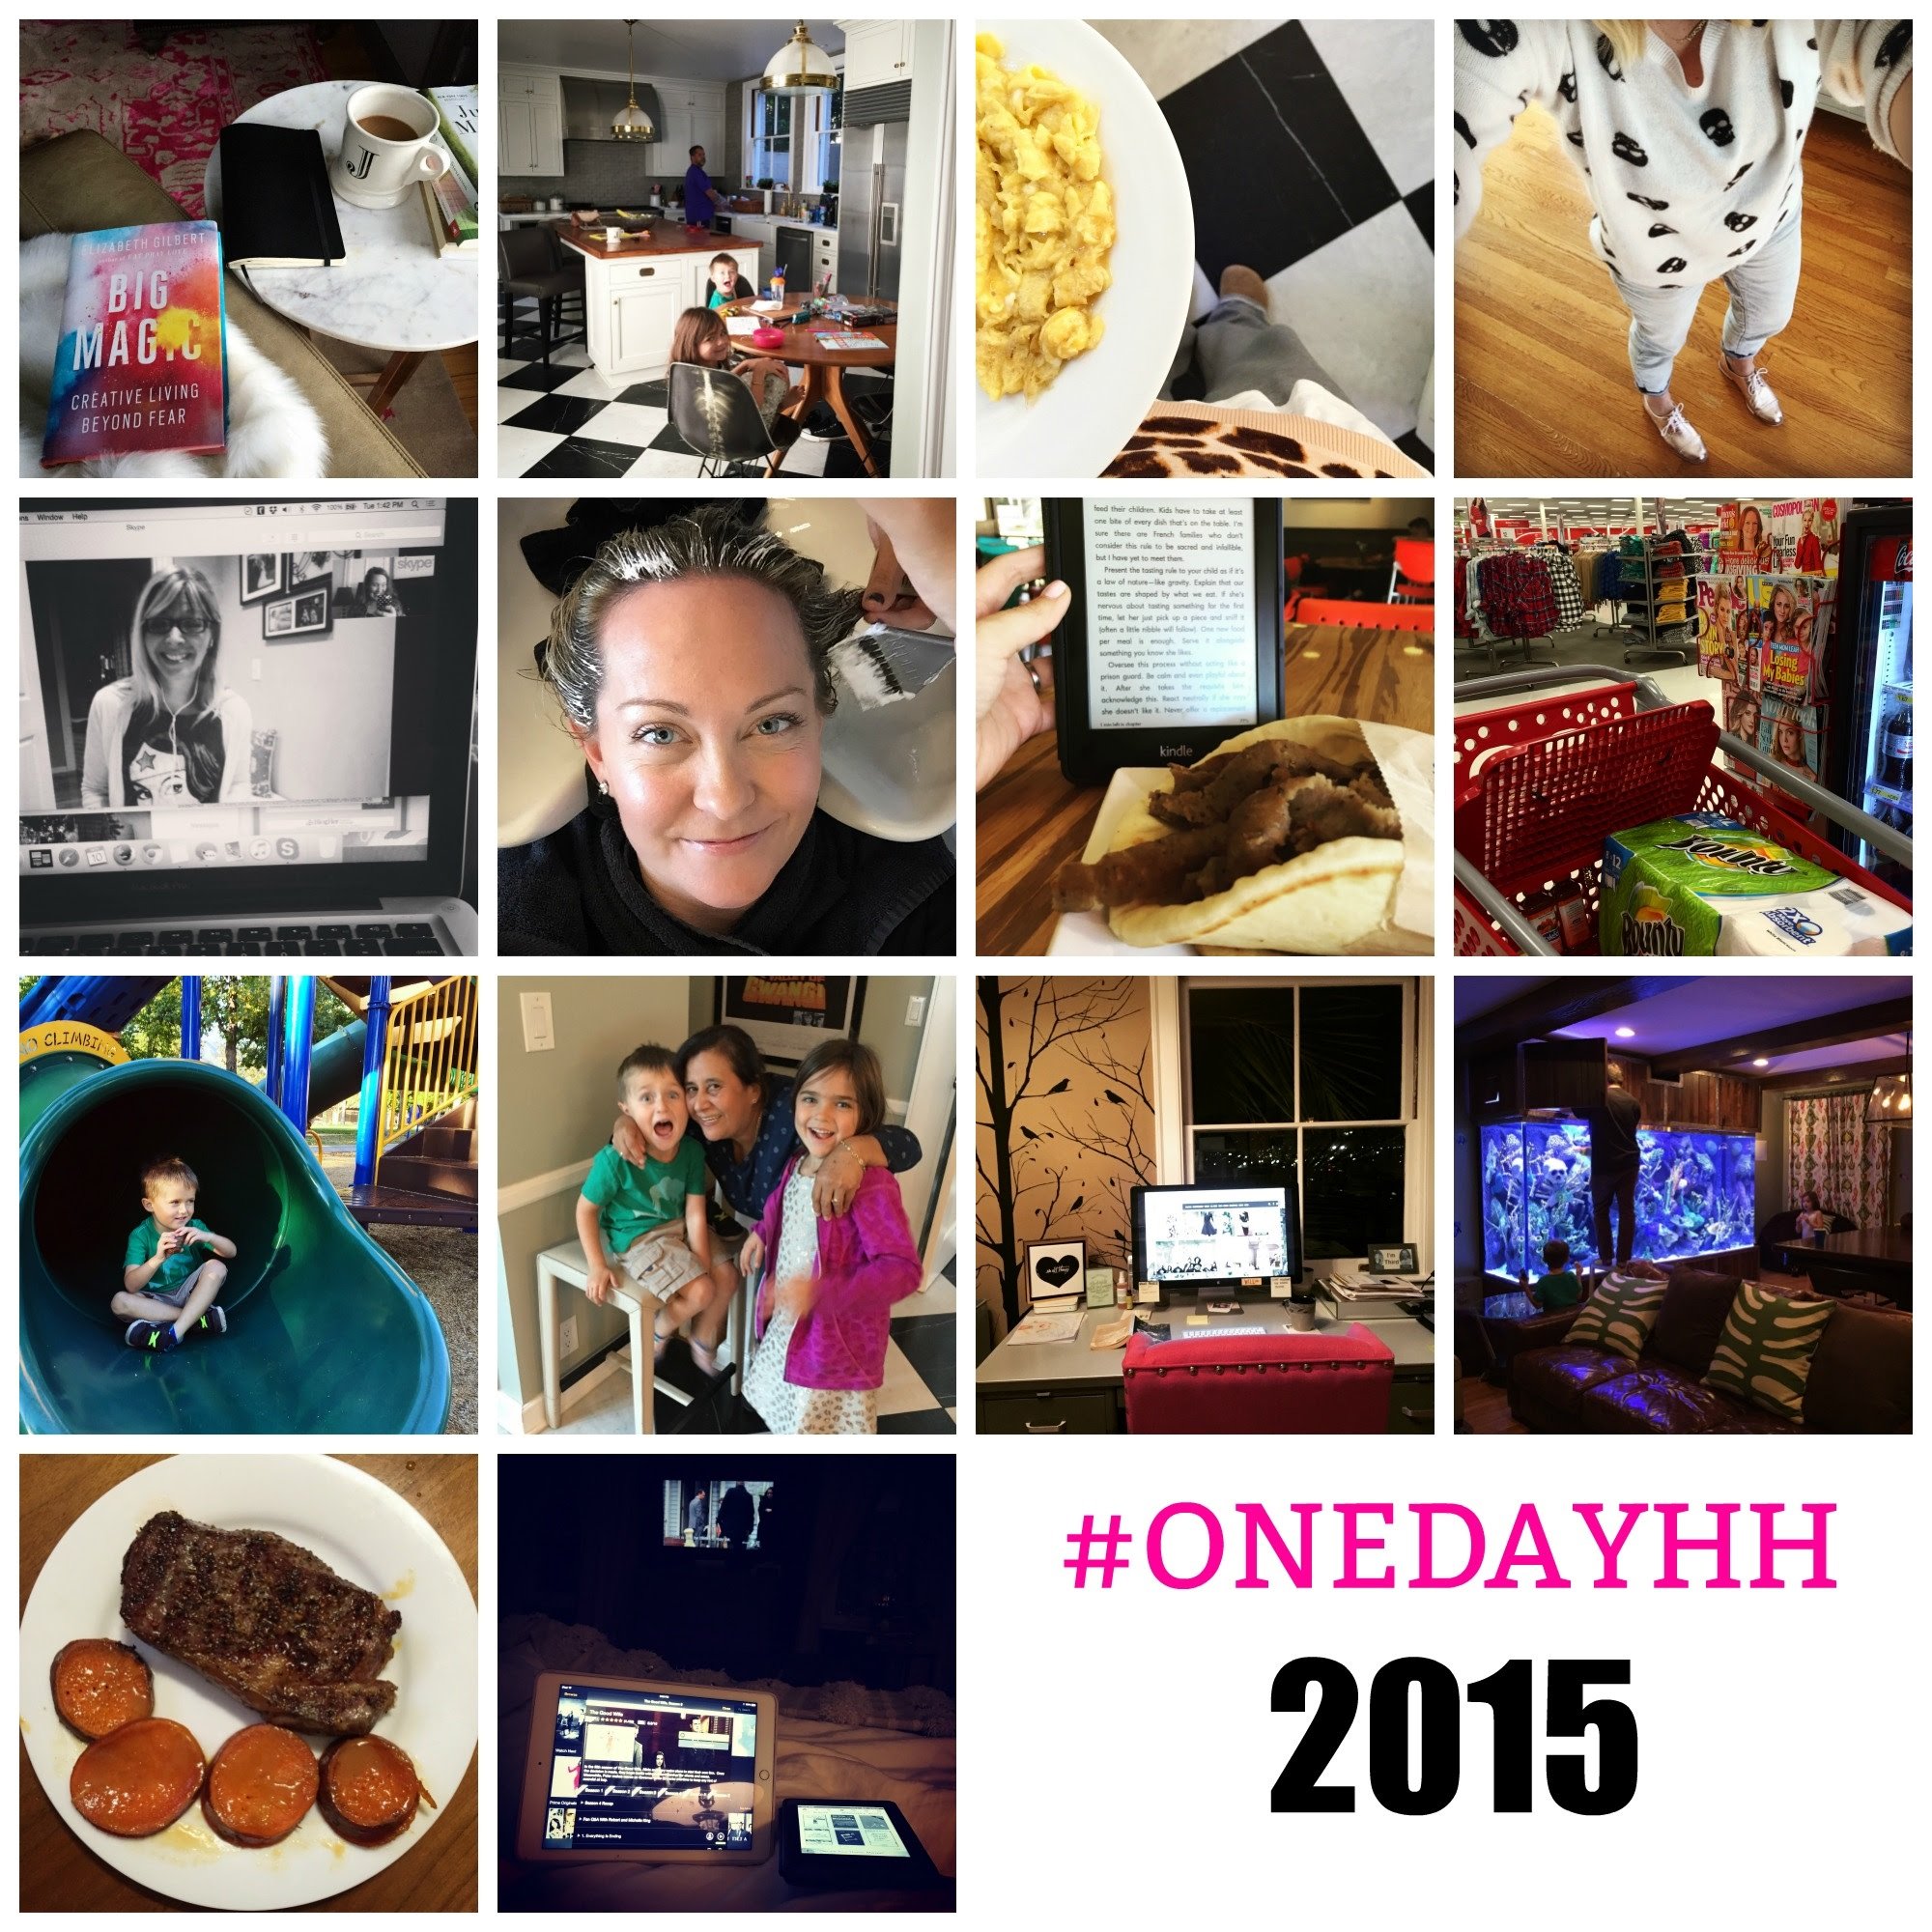 #ONEDAYHH 2015 collage.jpg